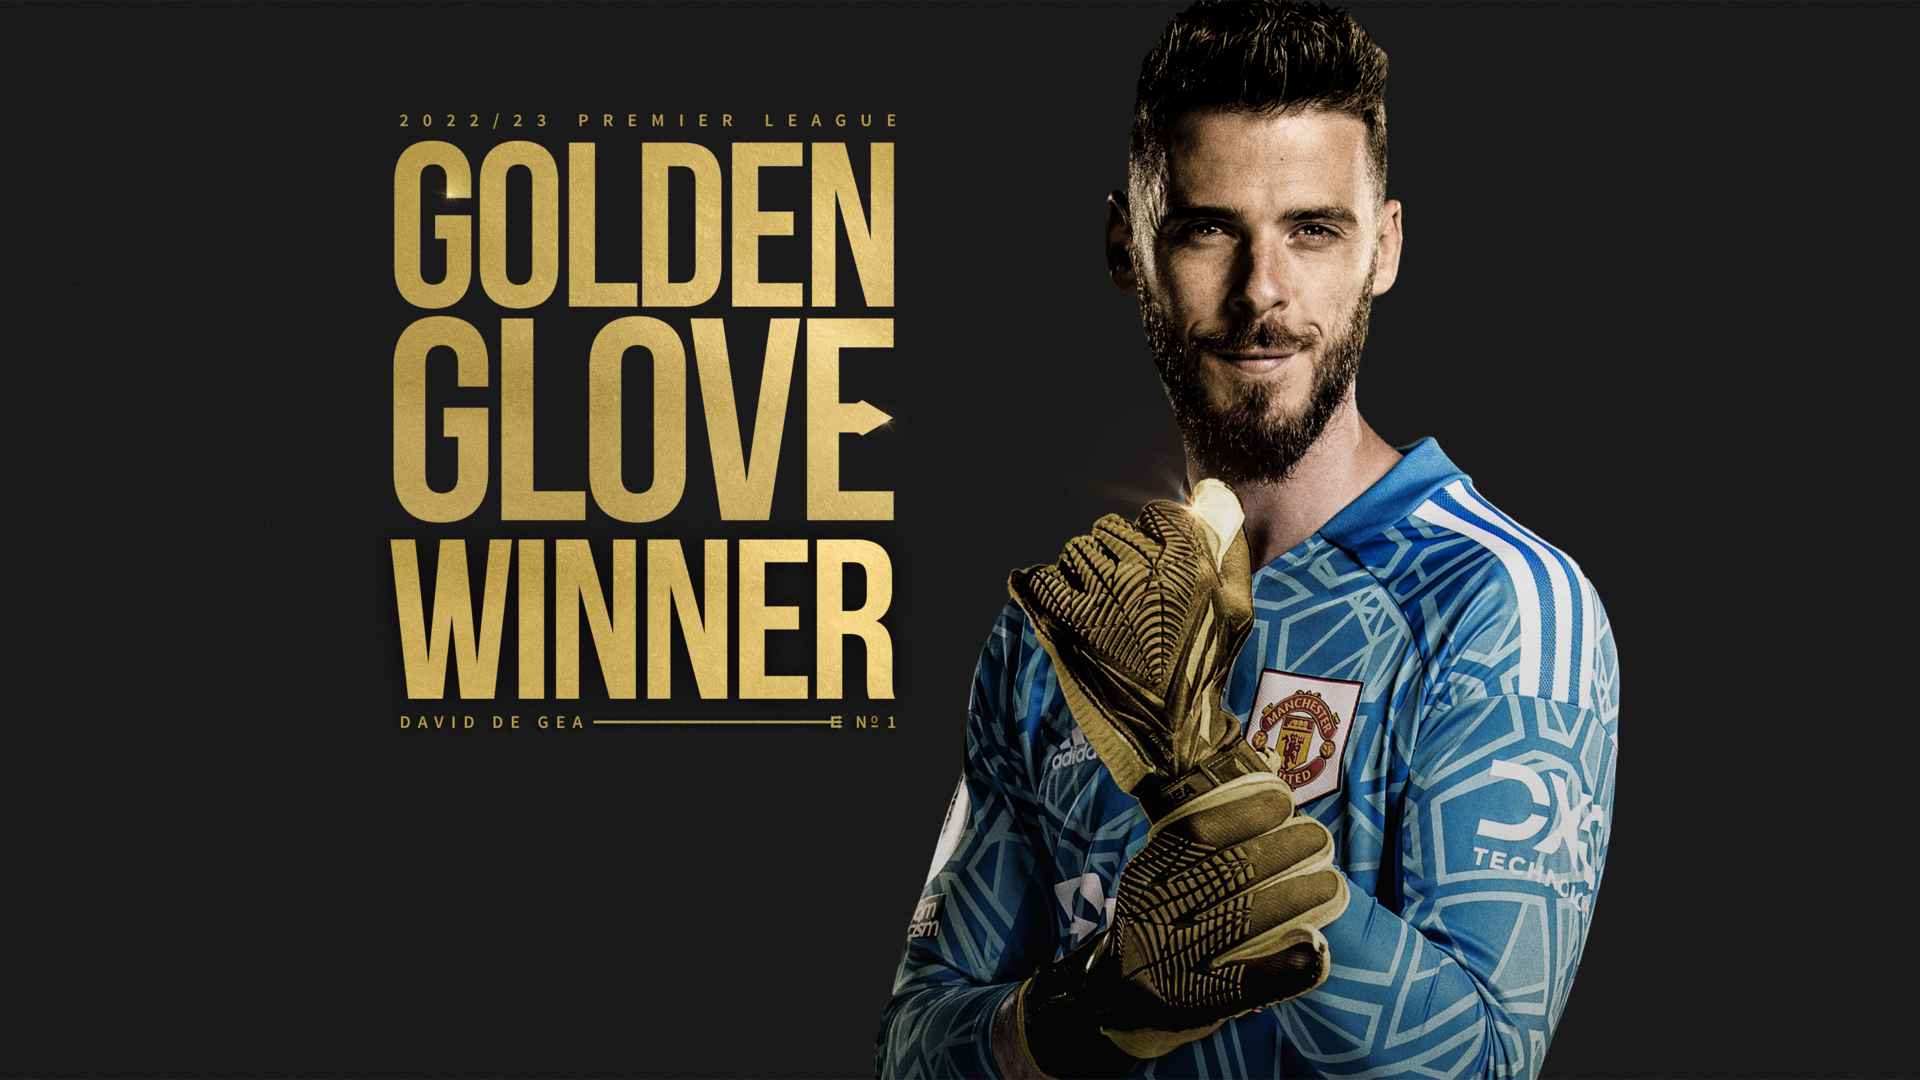 Man Utd goalkeeper David De Gea wins Premier League Golden Glove